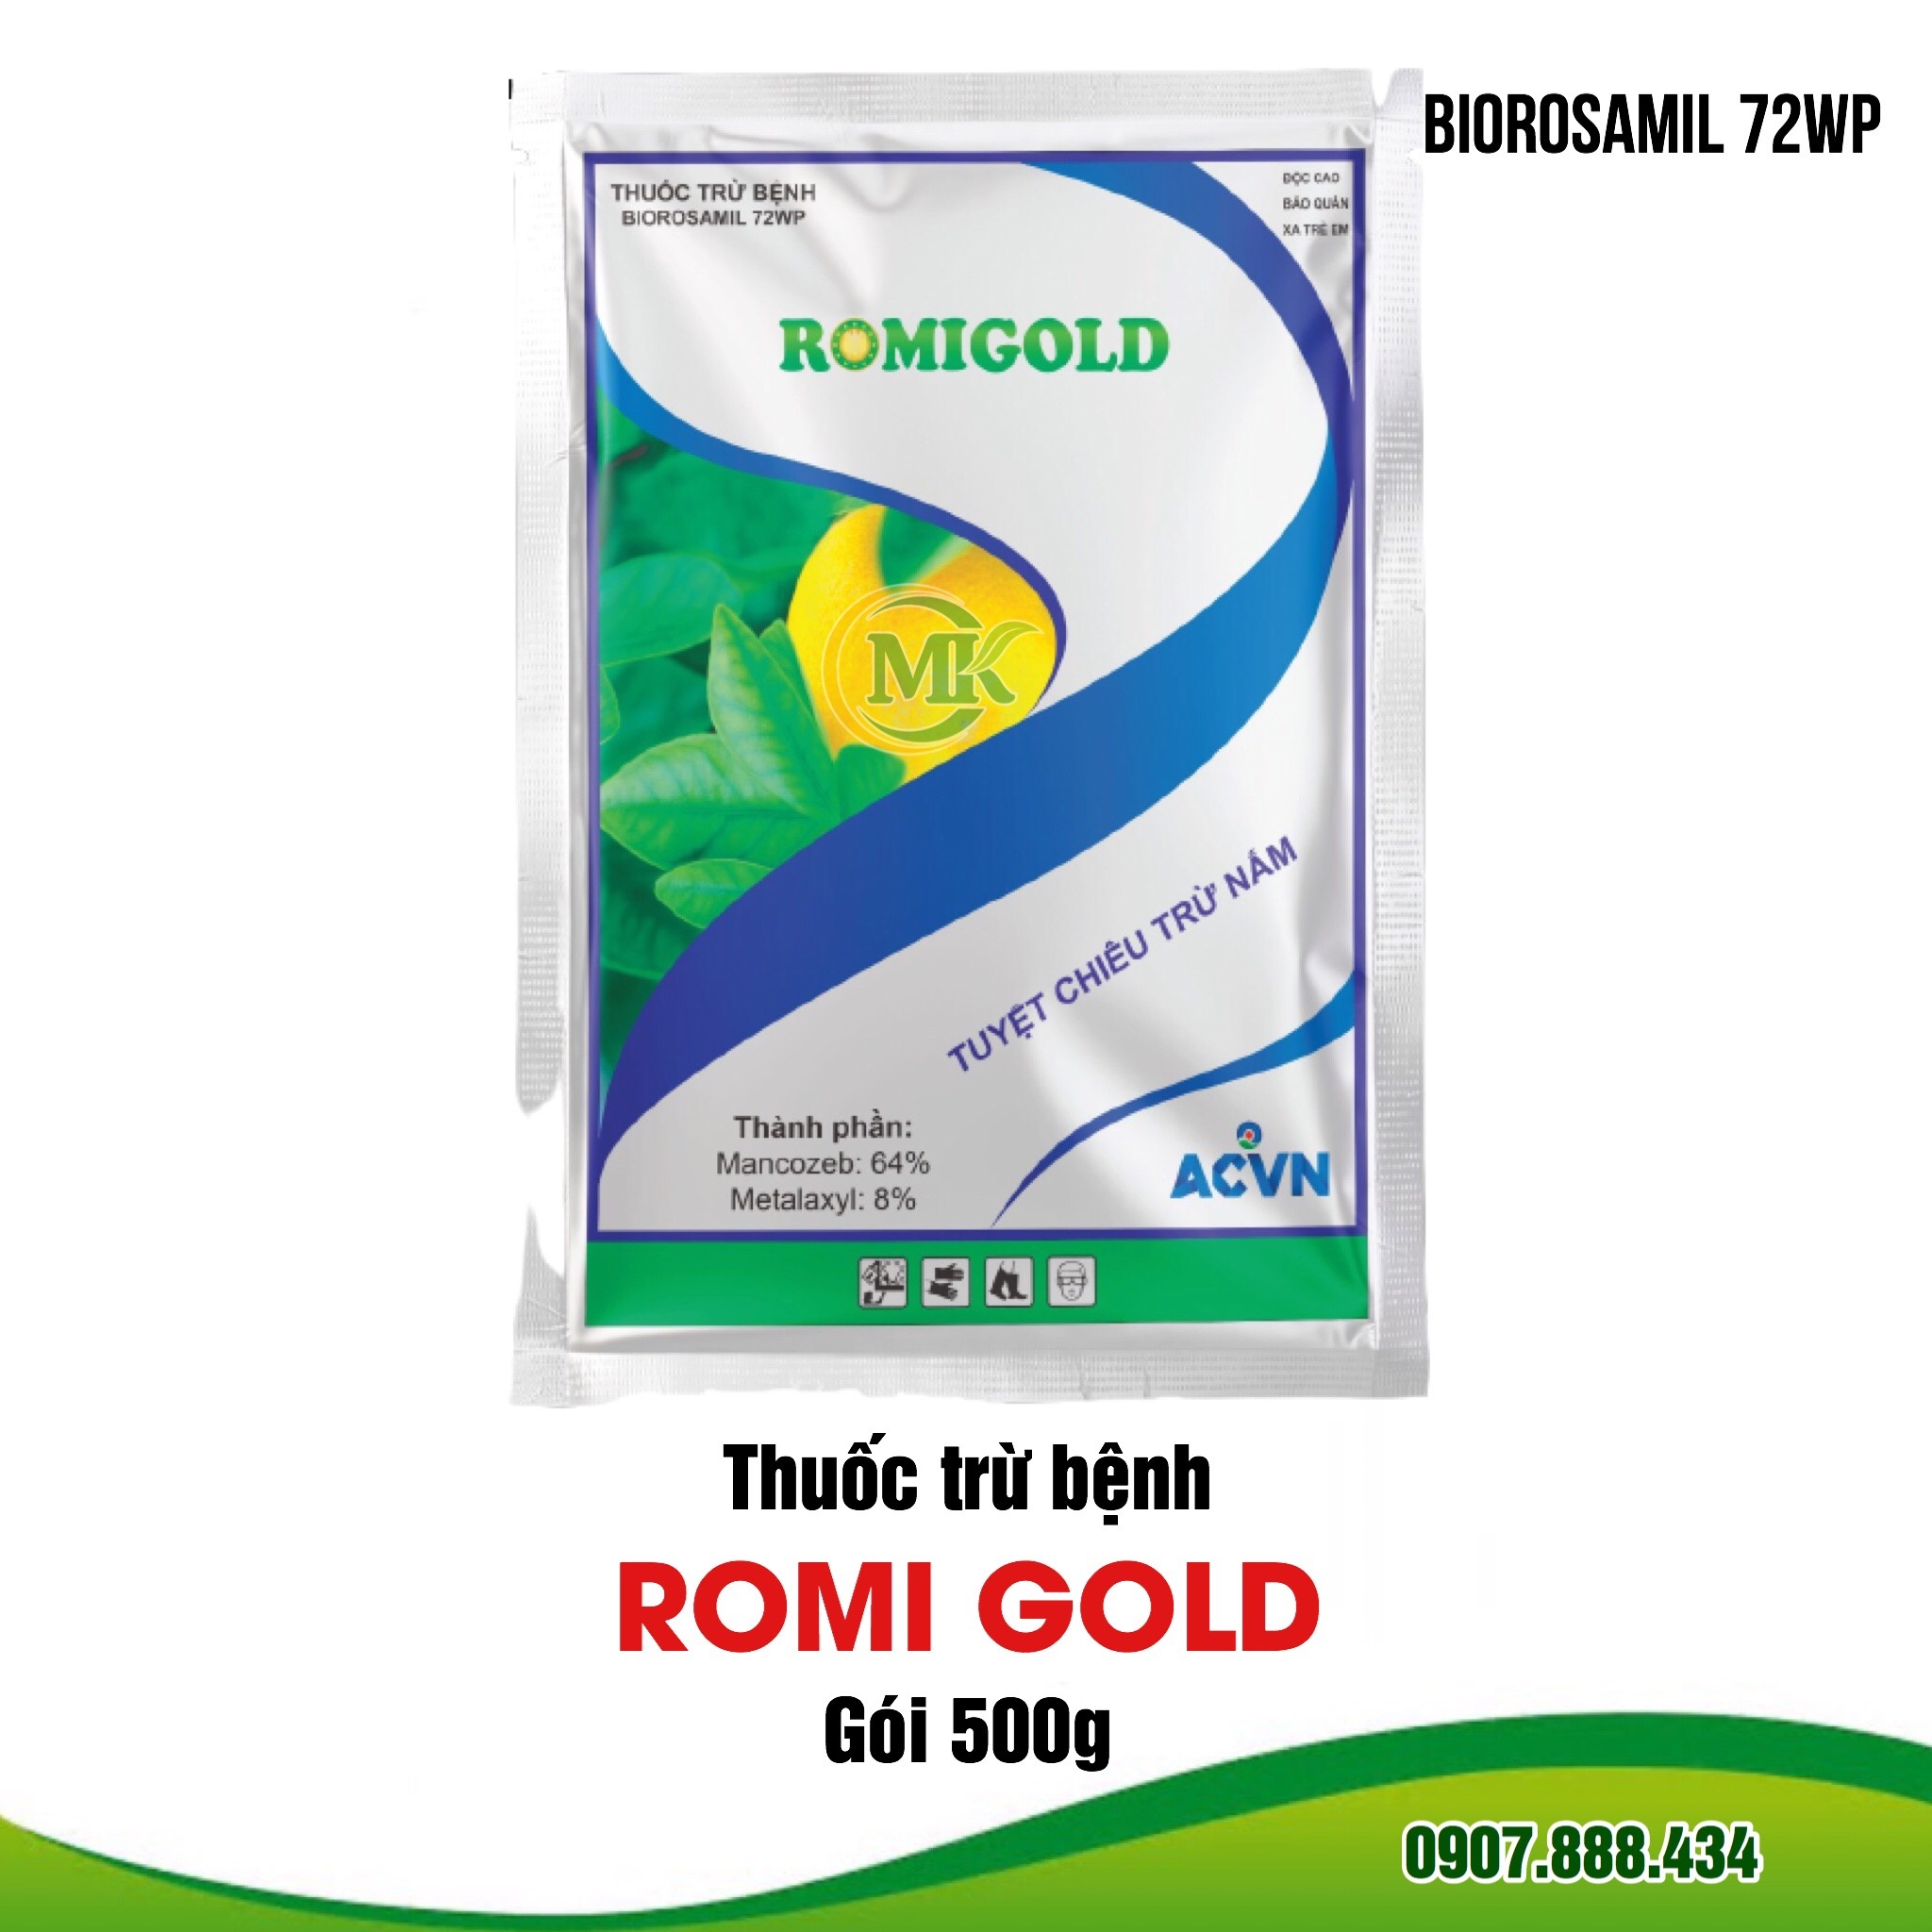 Biorosamil 72WP (ROMIGOLD) - Gói 500g